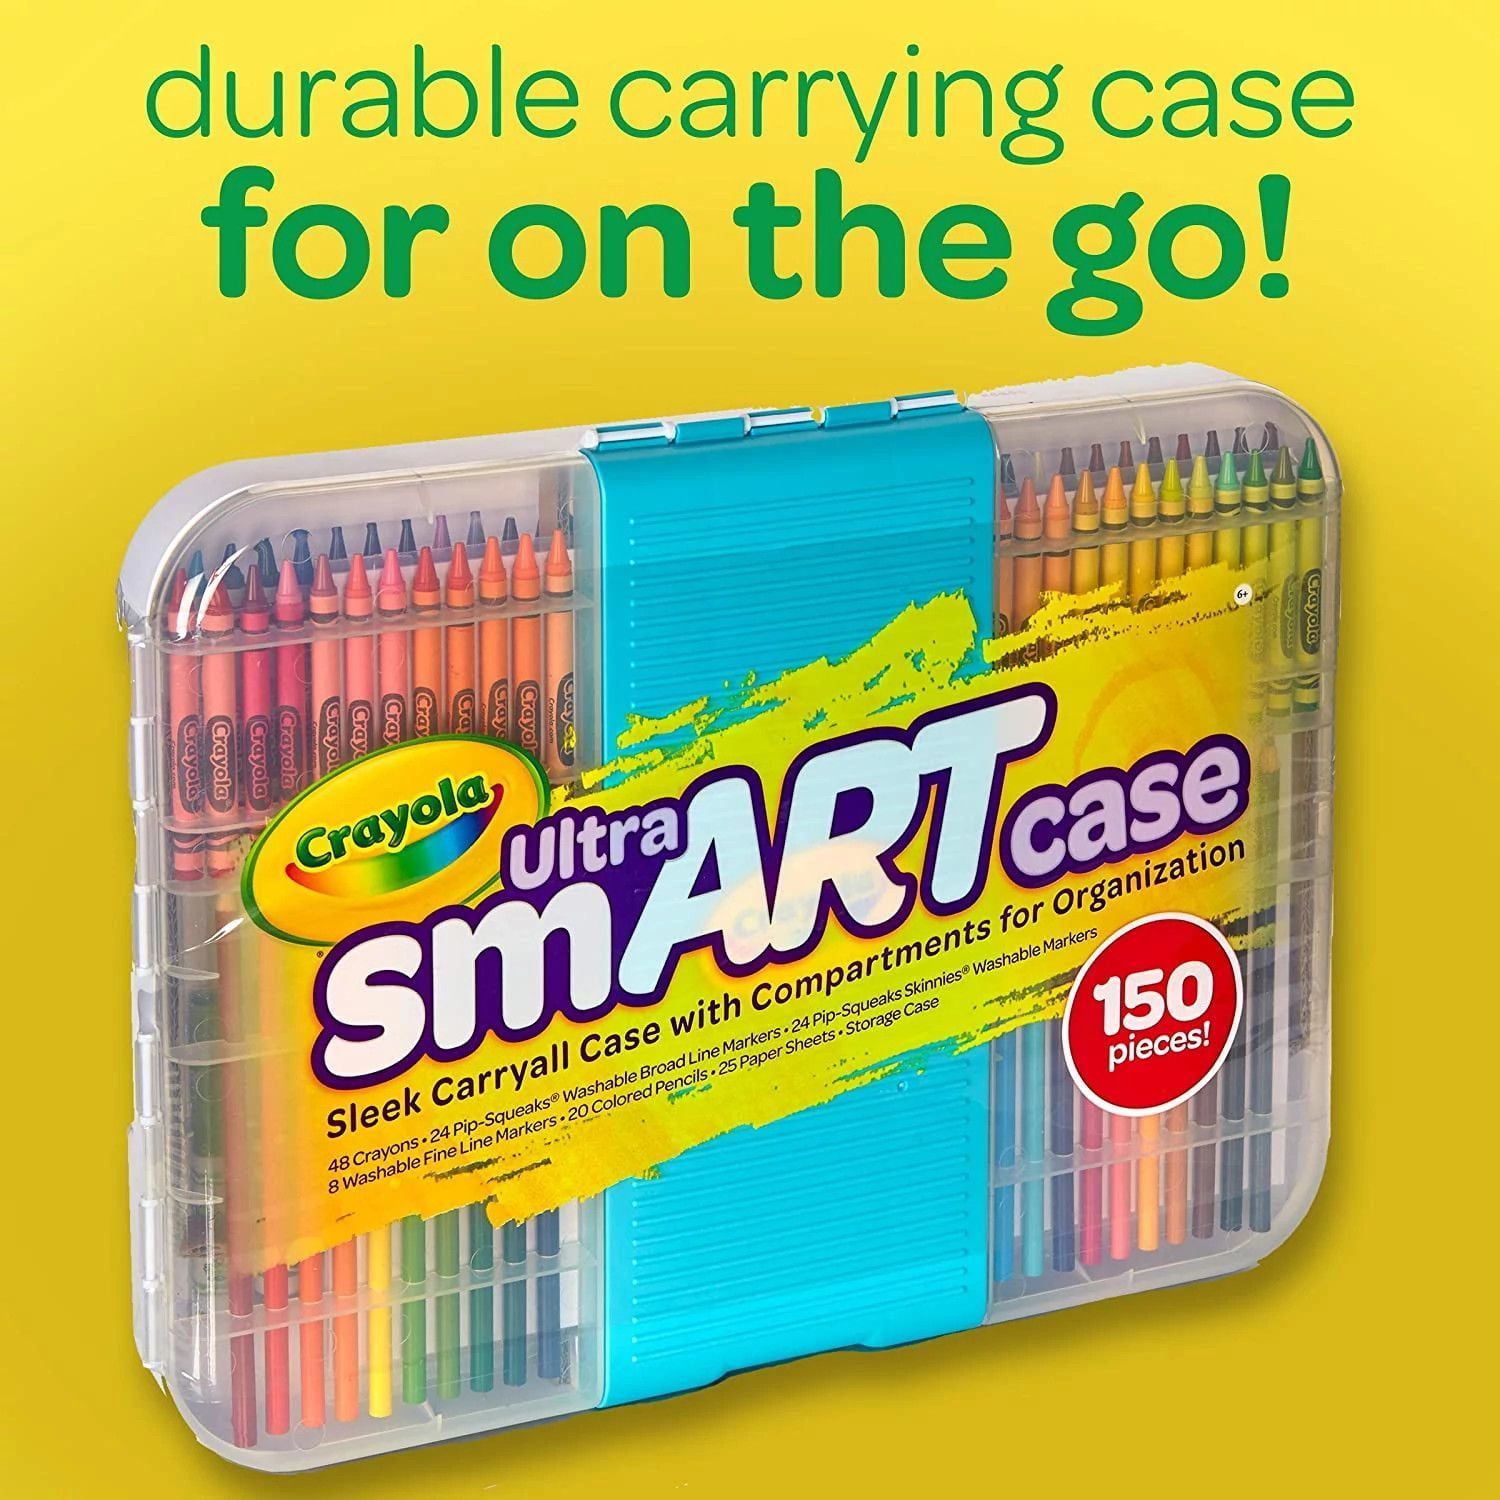 Smart Case Next Generation, Art Set for Kids, Crayola.com